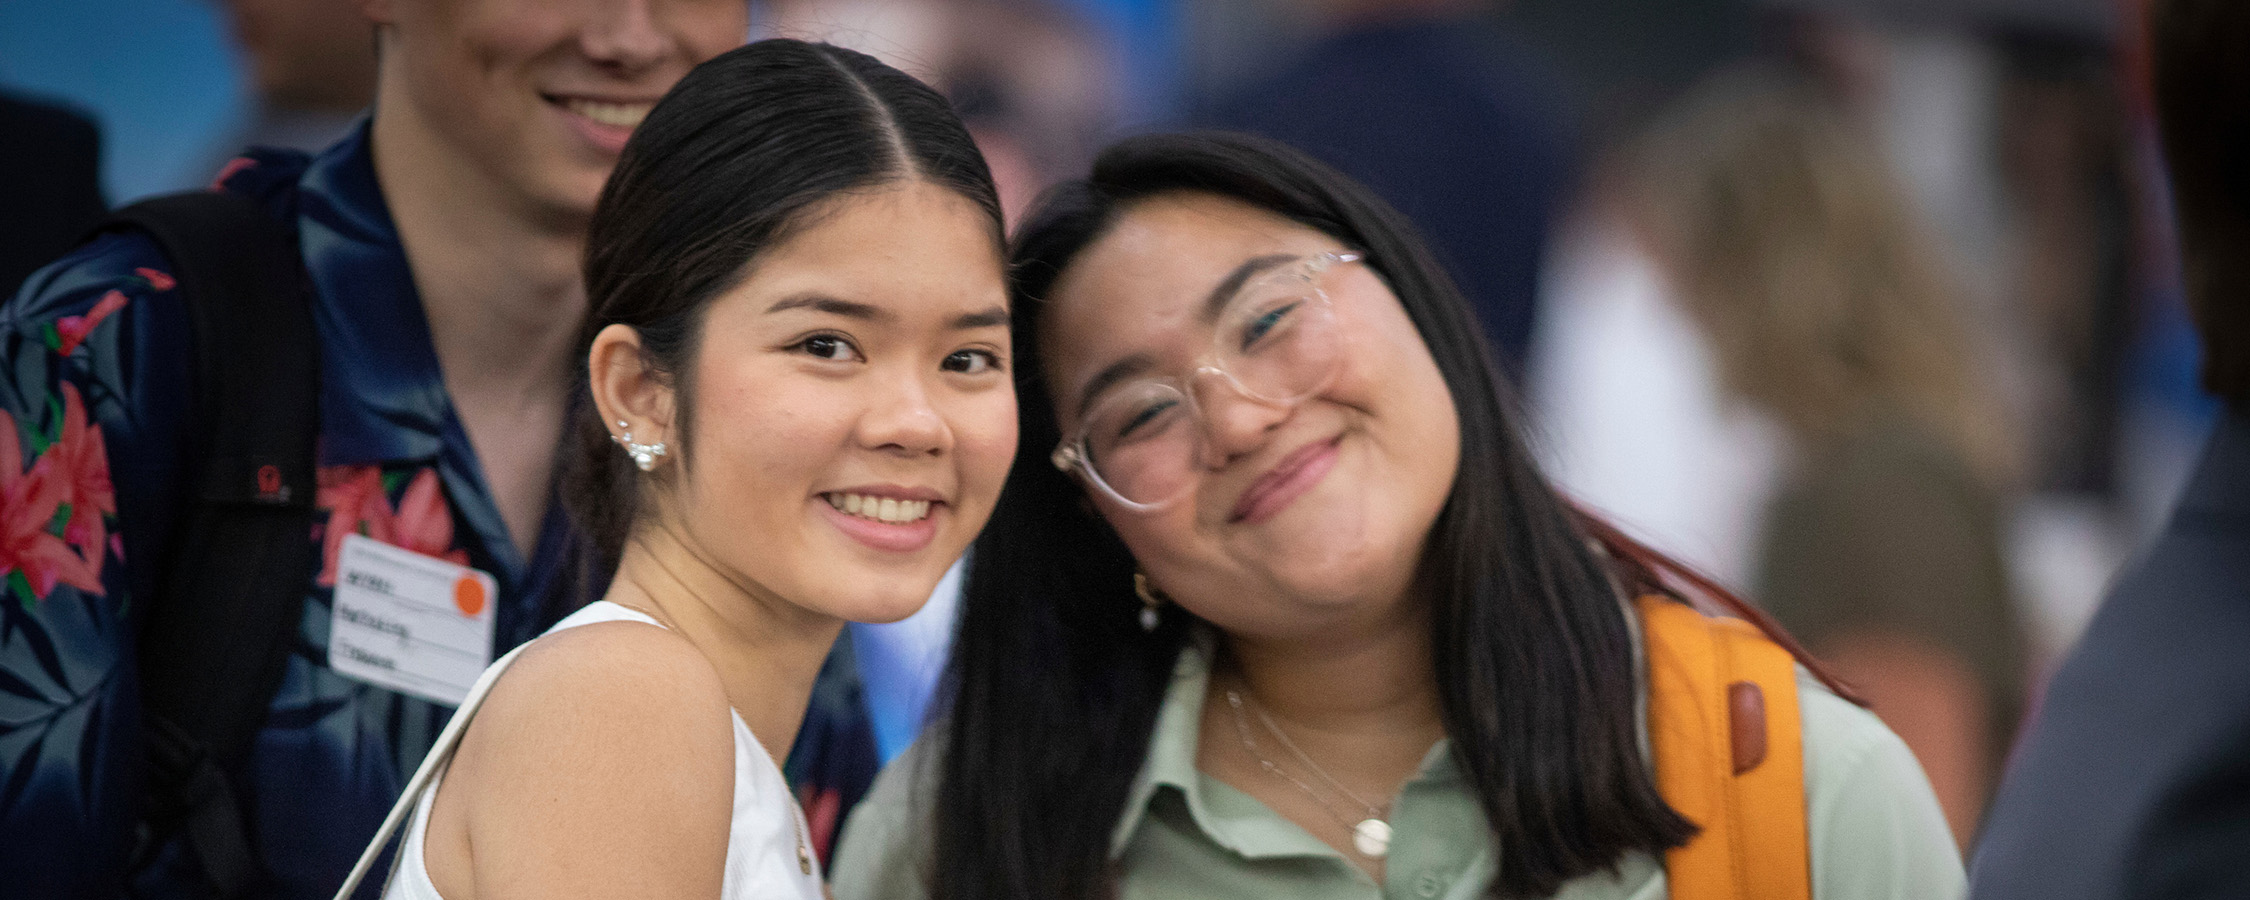 Two women smiling at a recruitment fair